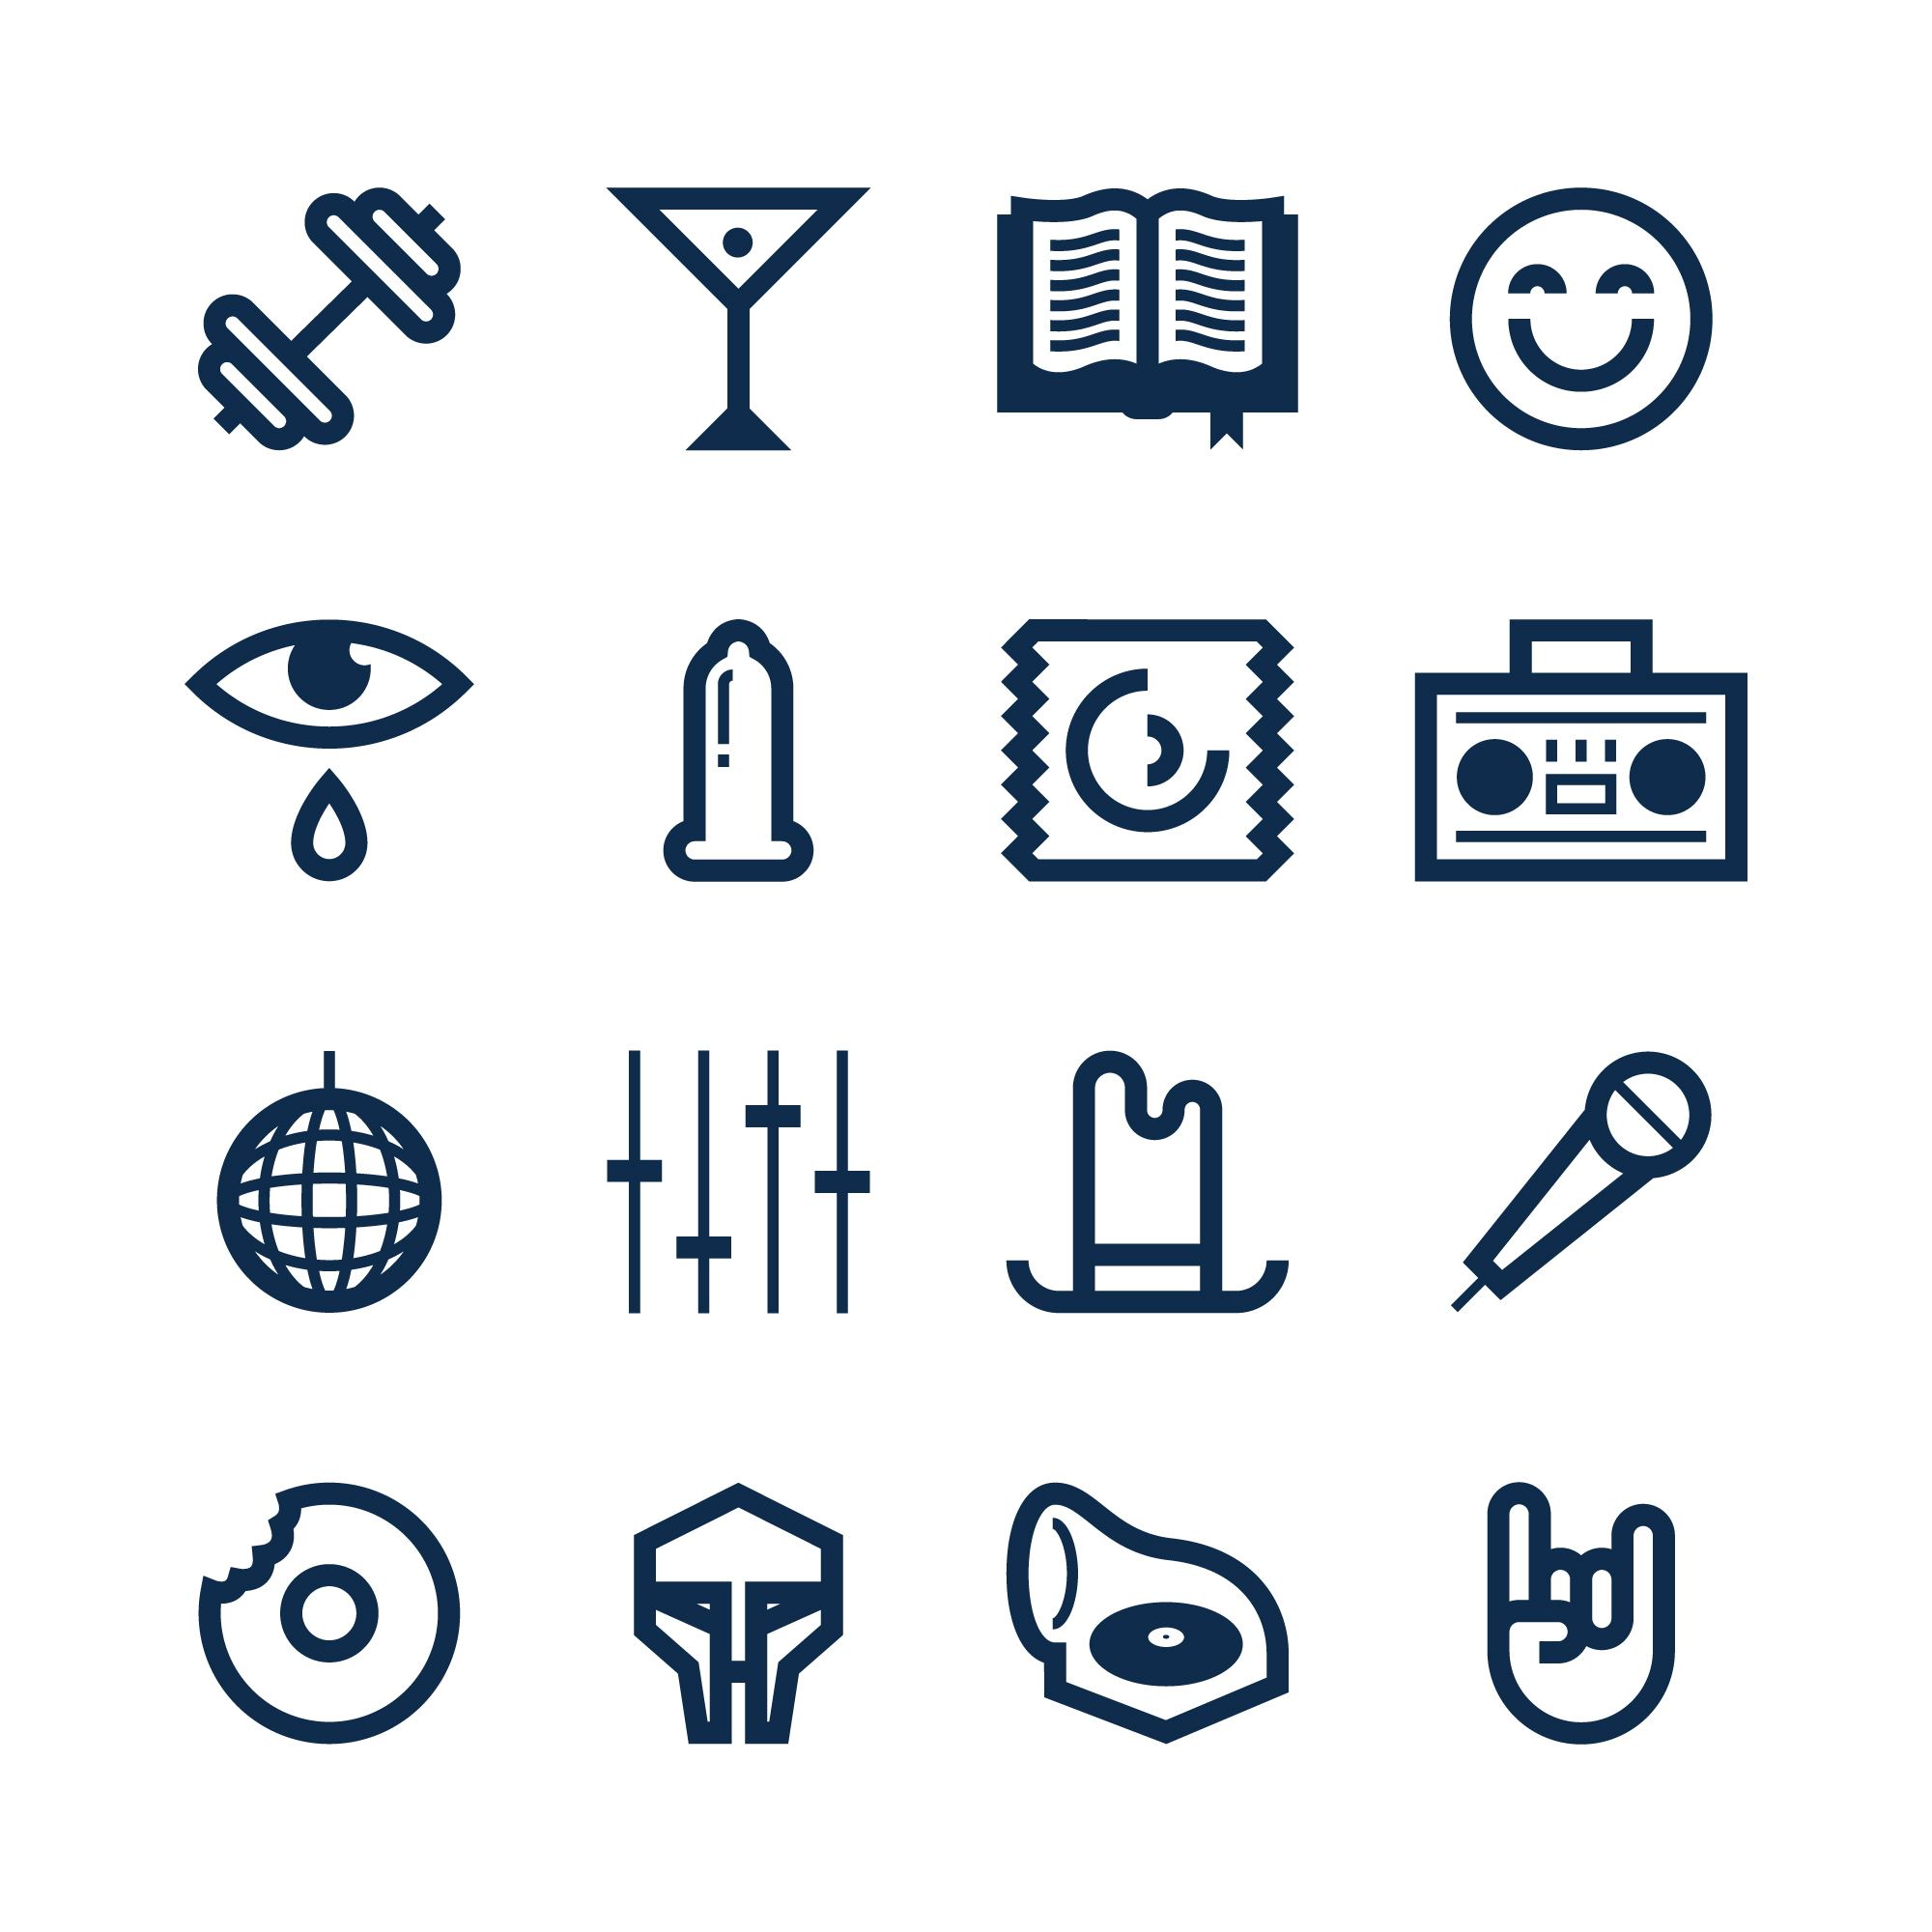 8tracks icons branding identity design by Maximillian Piras